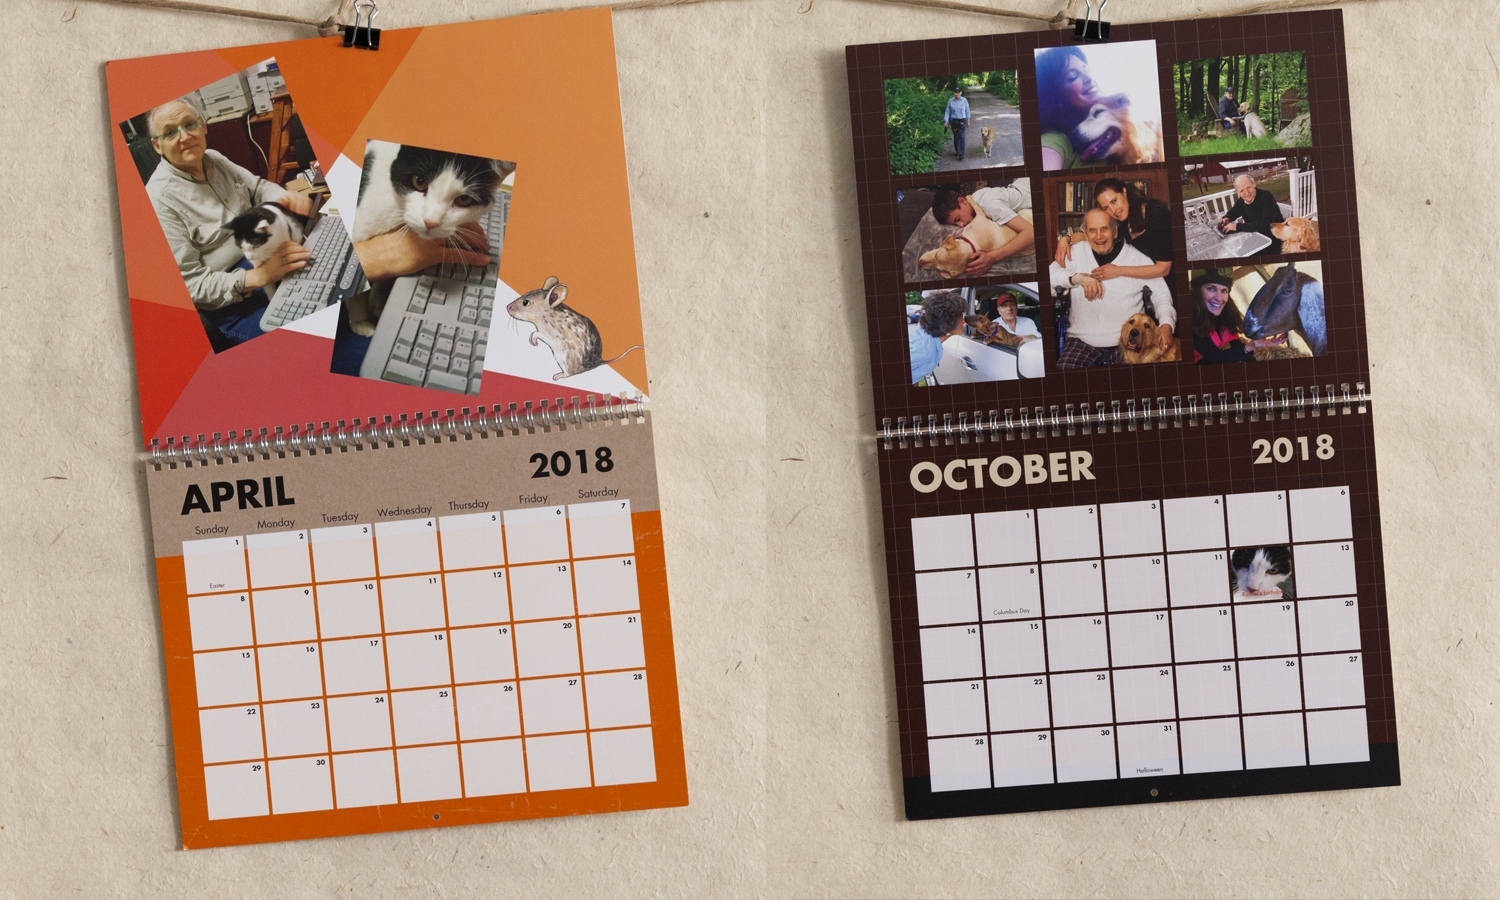 Best Photo Calendars Of 2018 - Cheap, High-Quality Calendar Printing Calendar Printing For Photographers